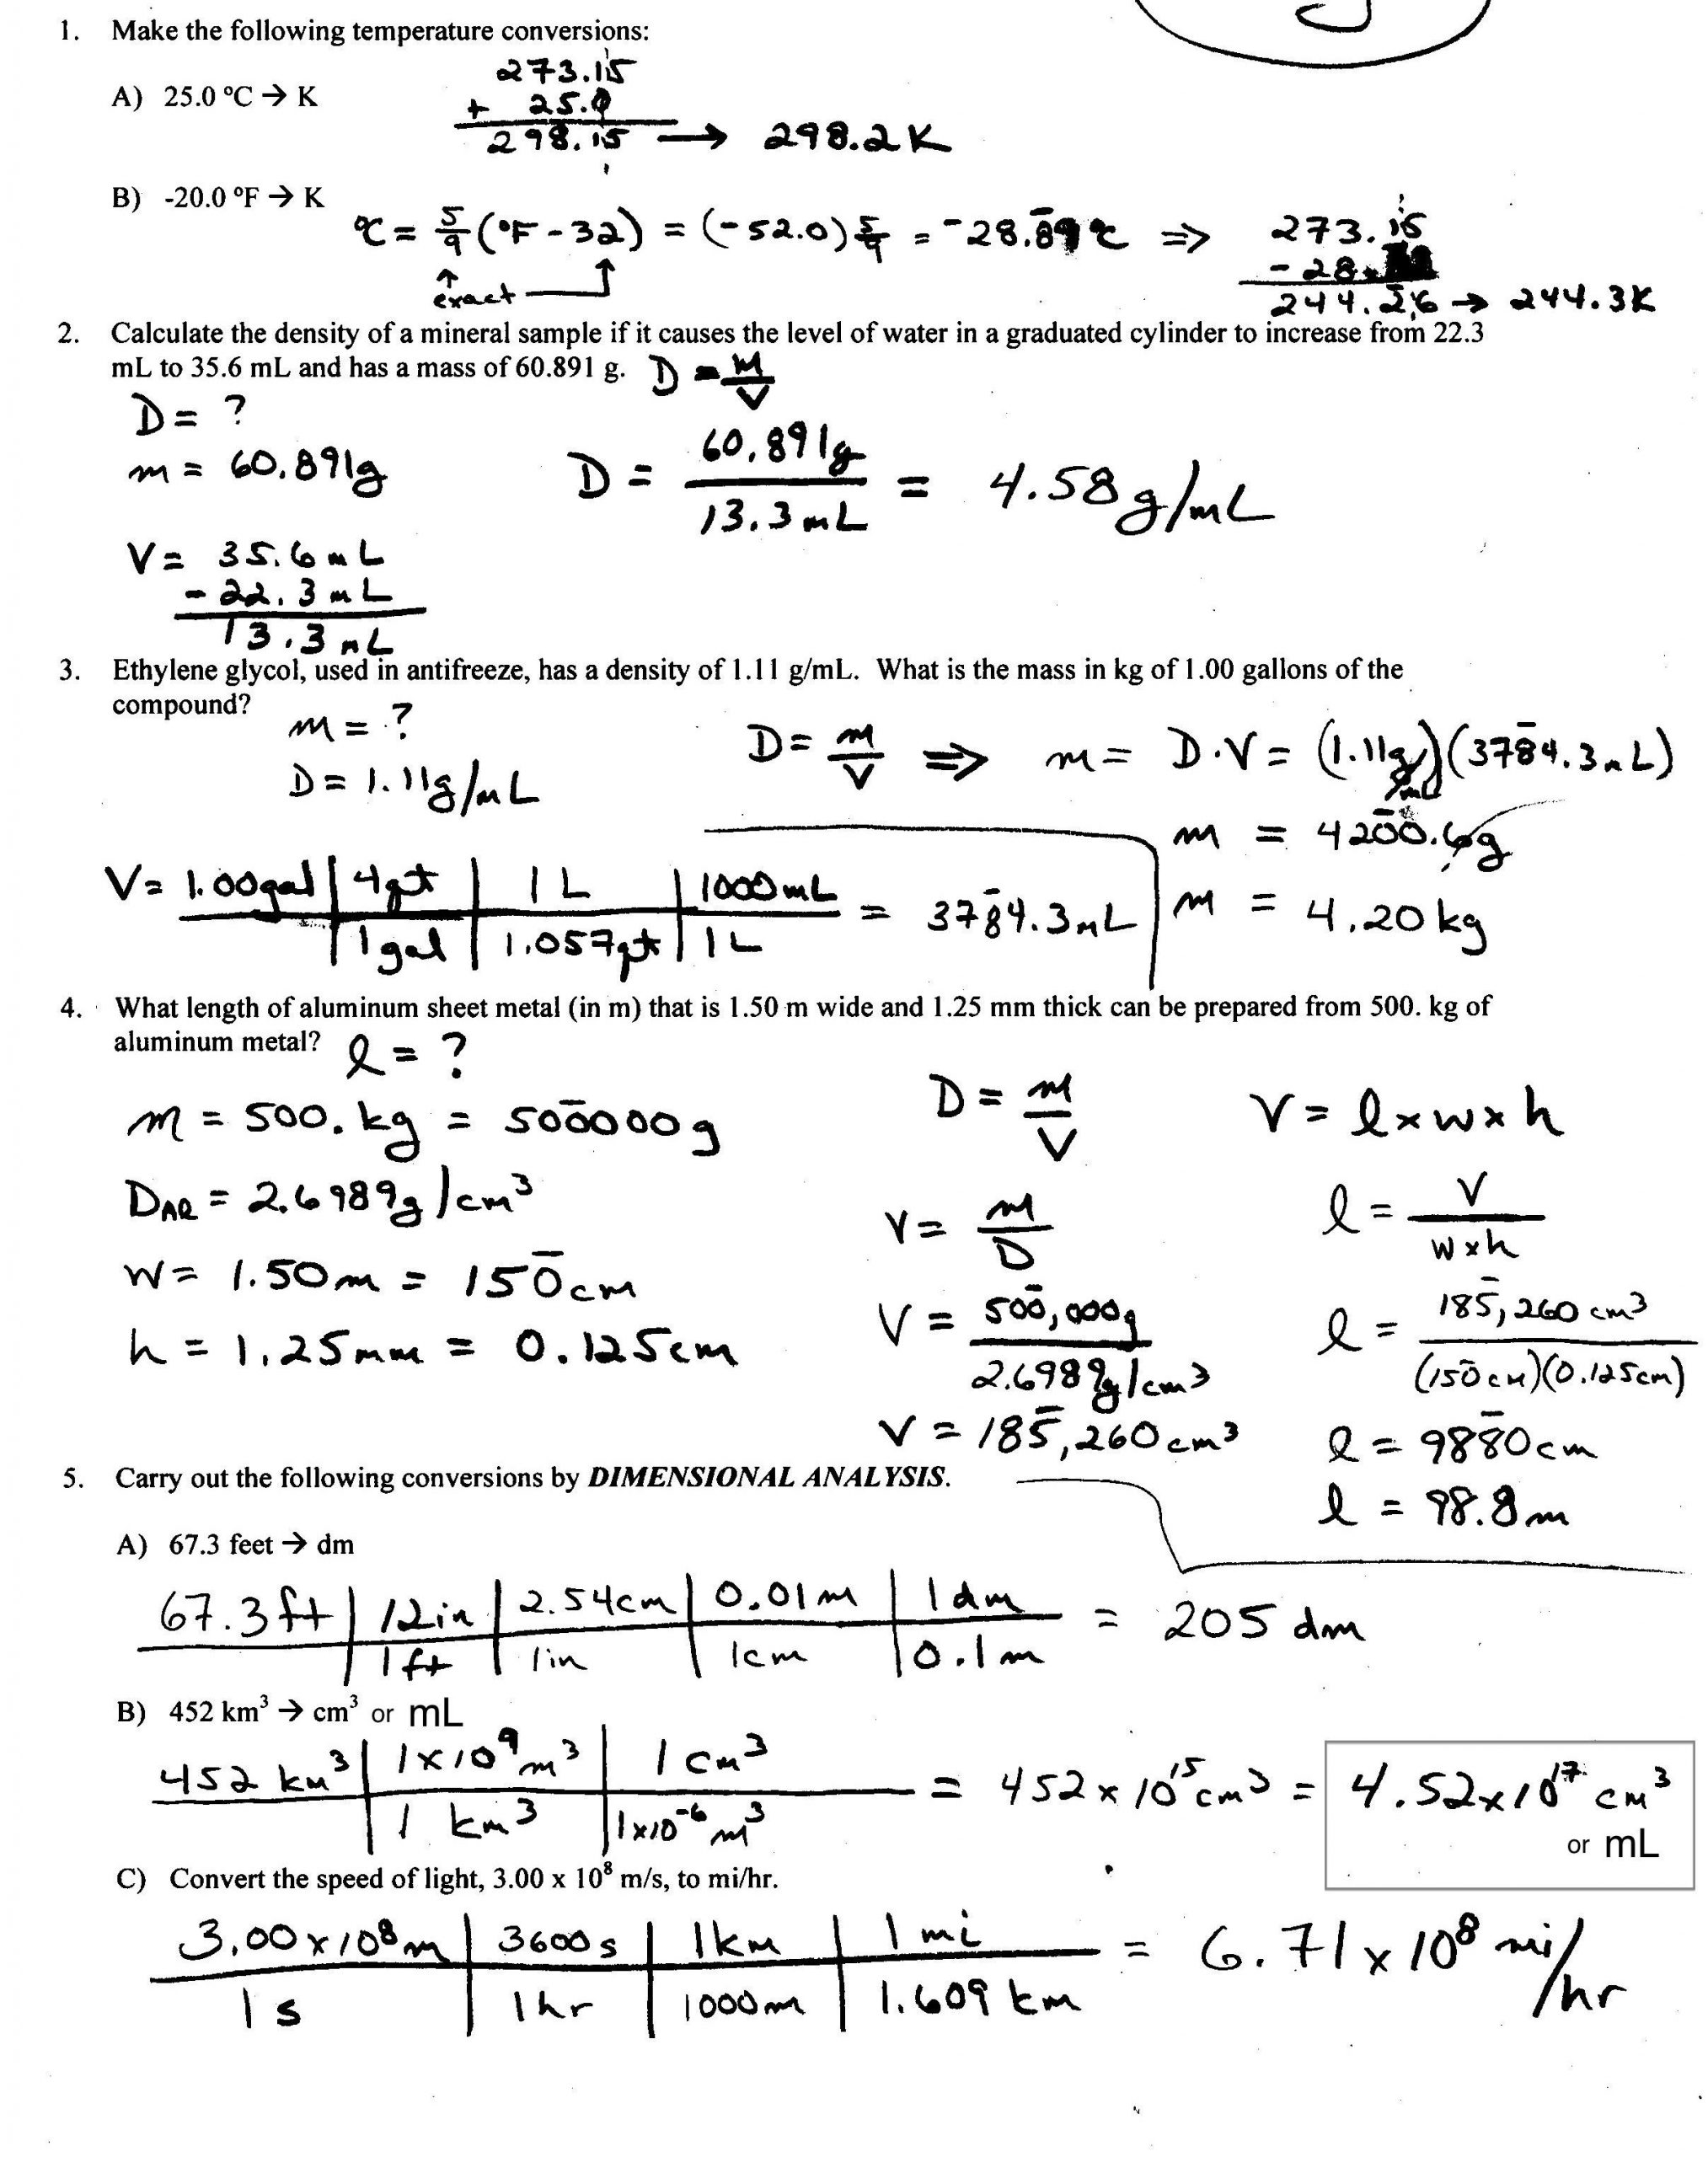 Dimensional Analysis Problems Worksheet Density Worksheet with Answers Calculate Density Worksheet